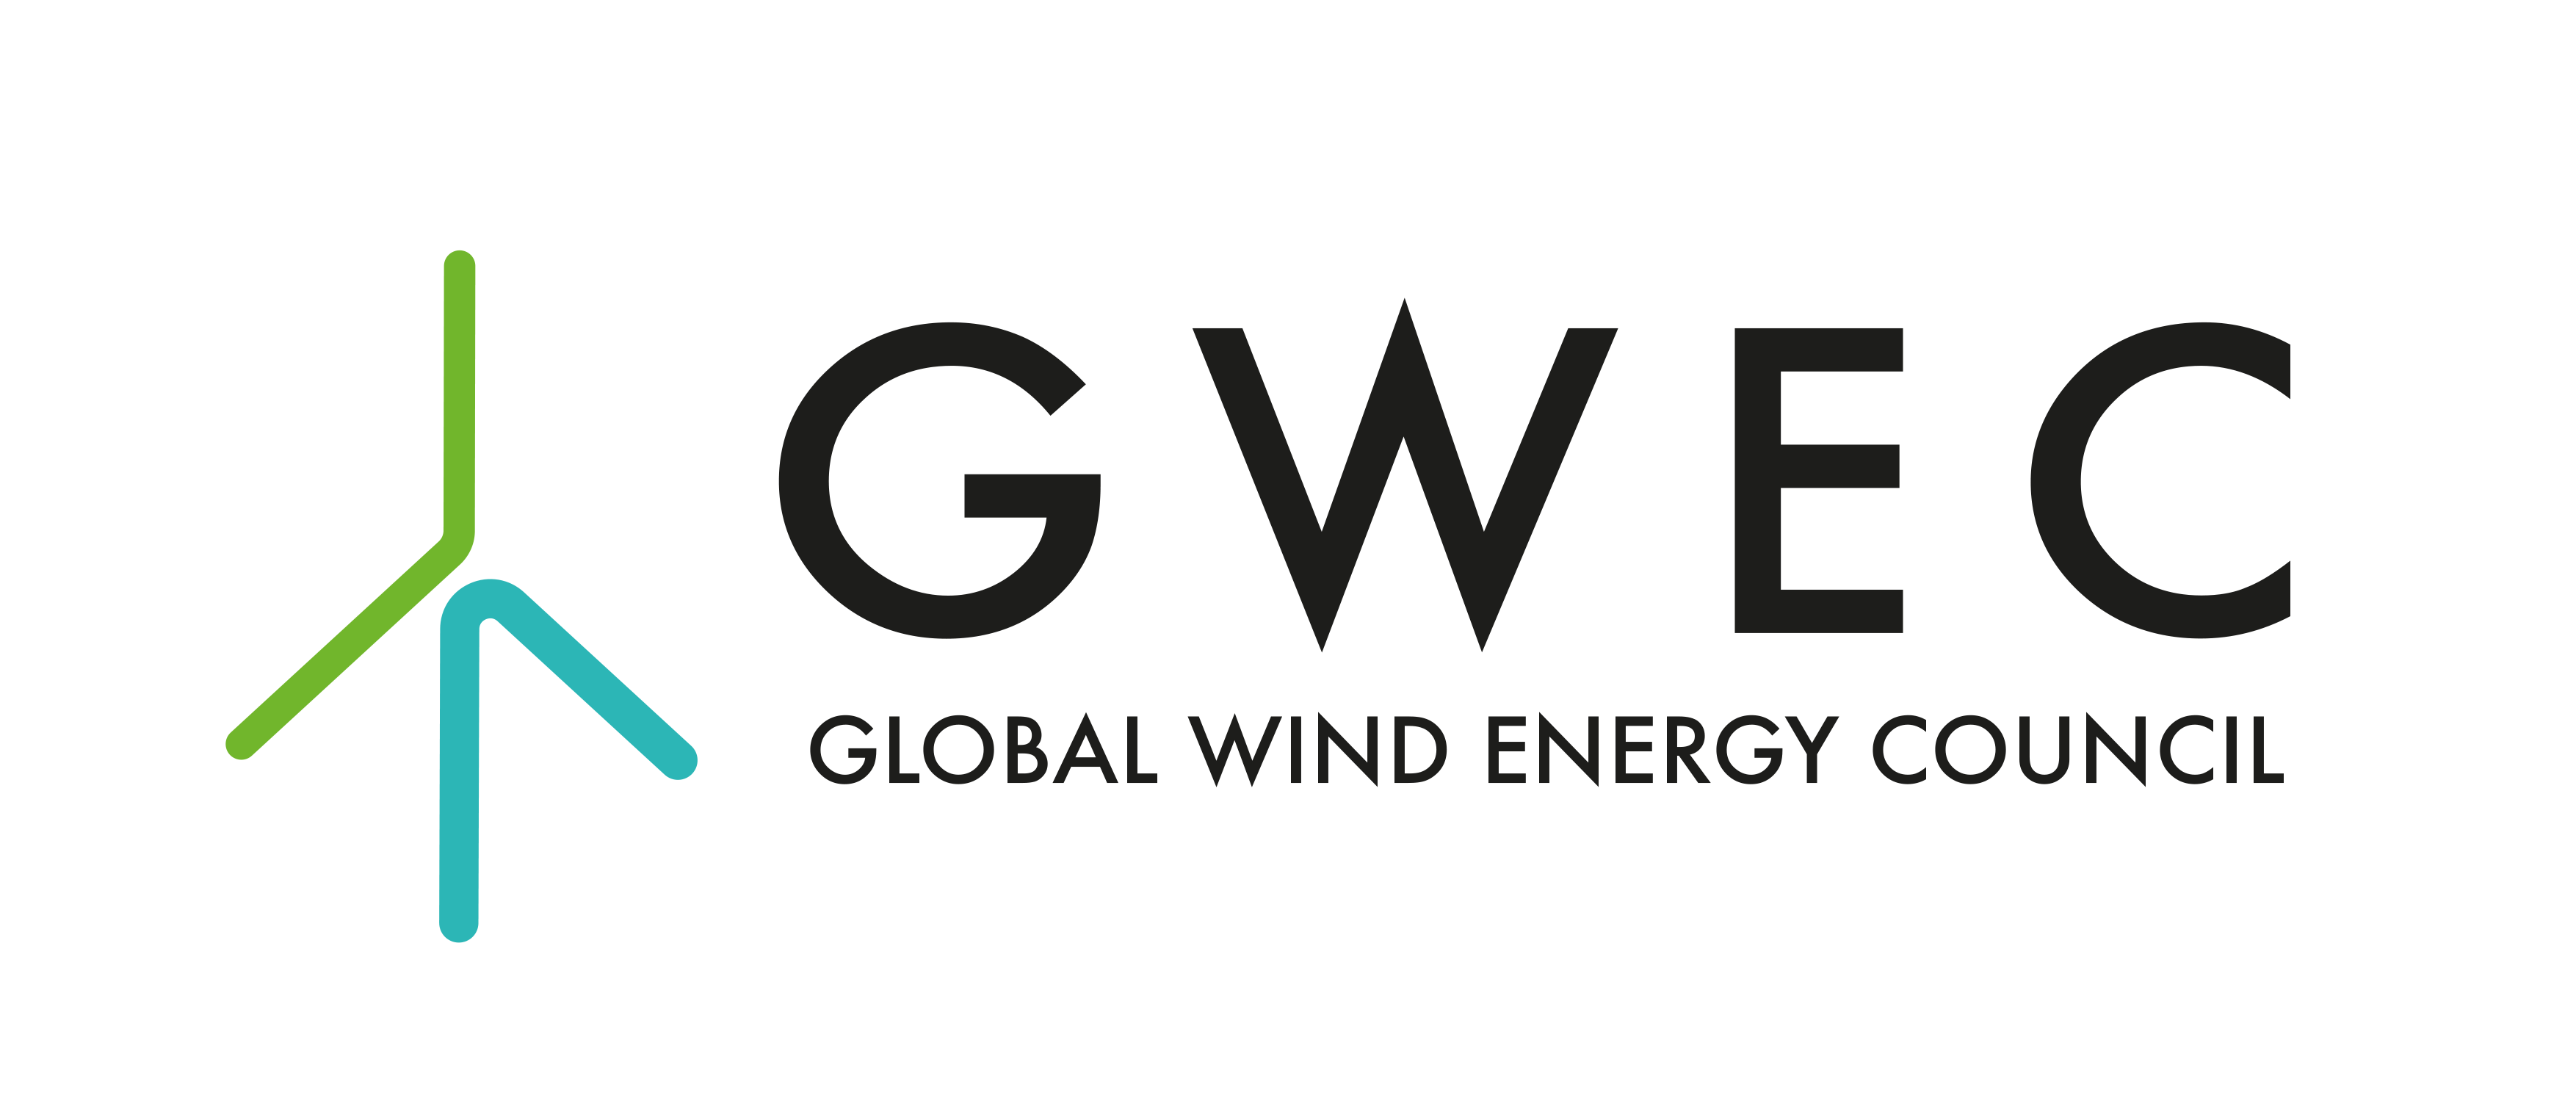 Global Wind Energy Council Logo, GWEC